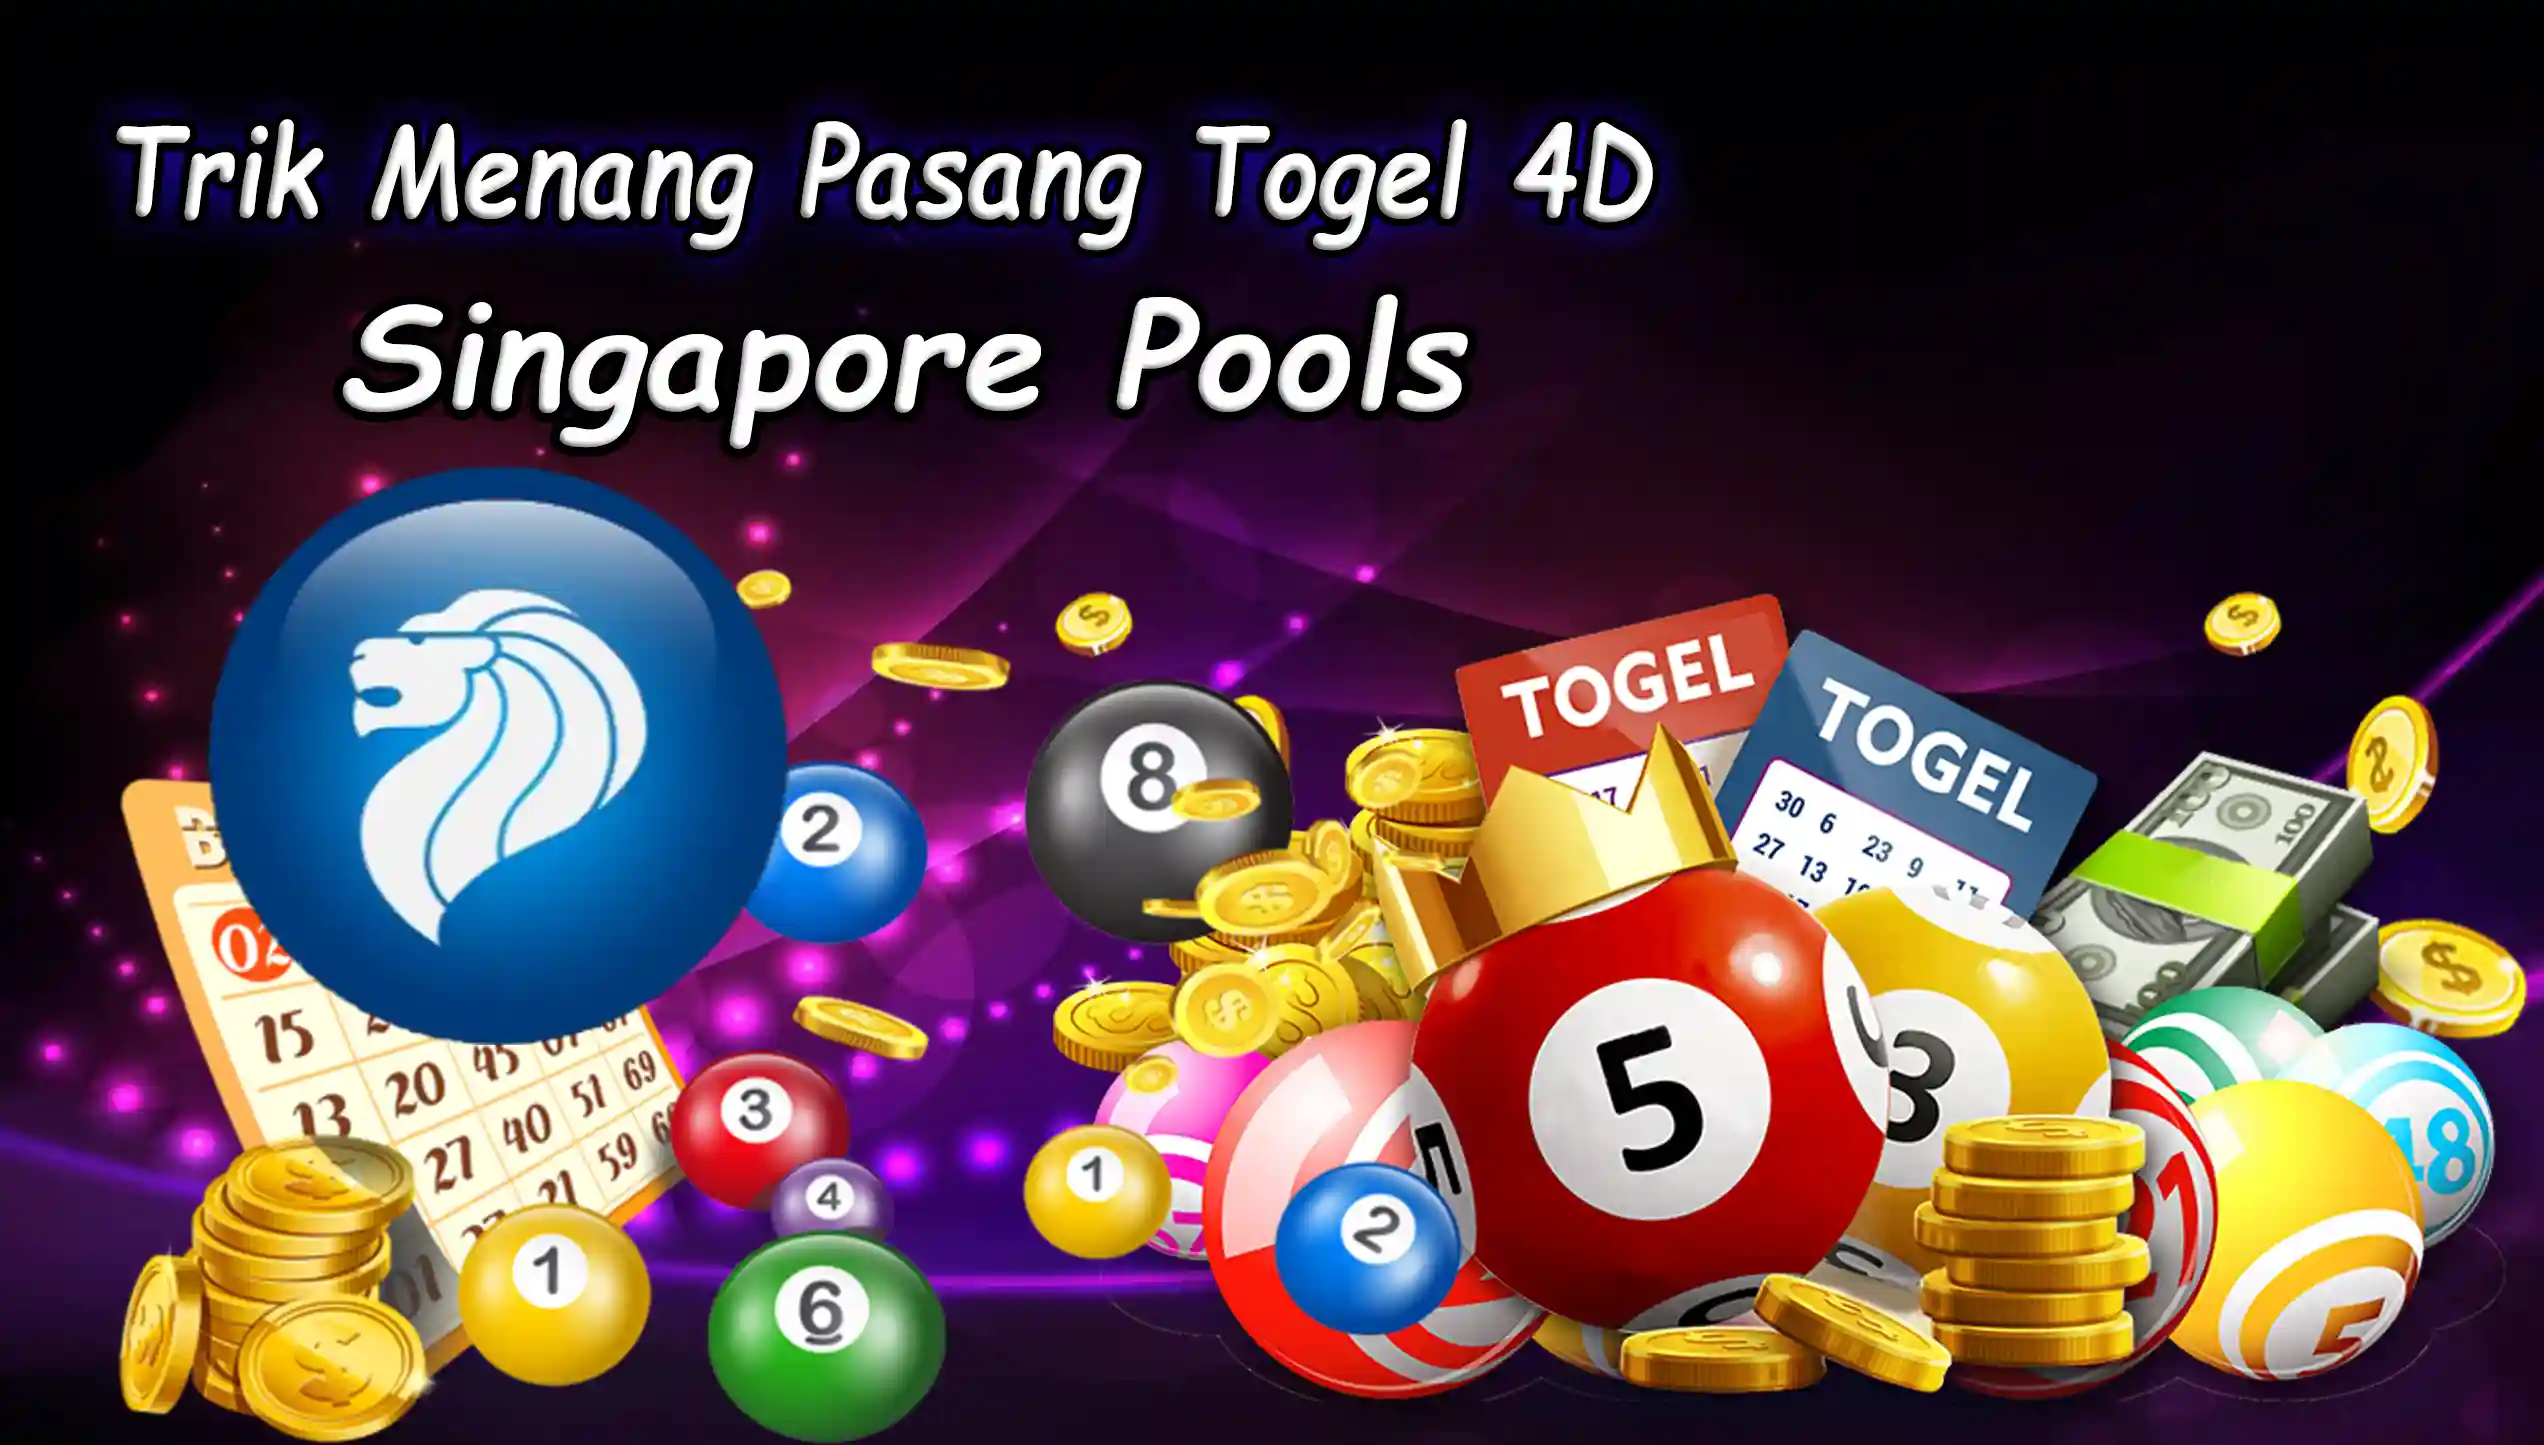 Trik Menang Pasang Togel 4D Singapore Pools